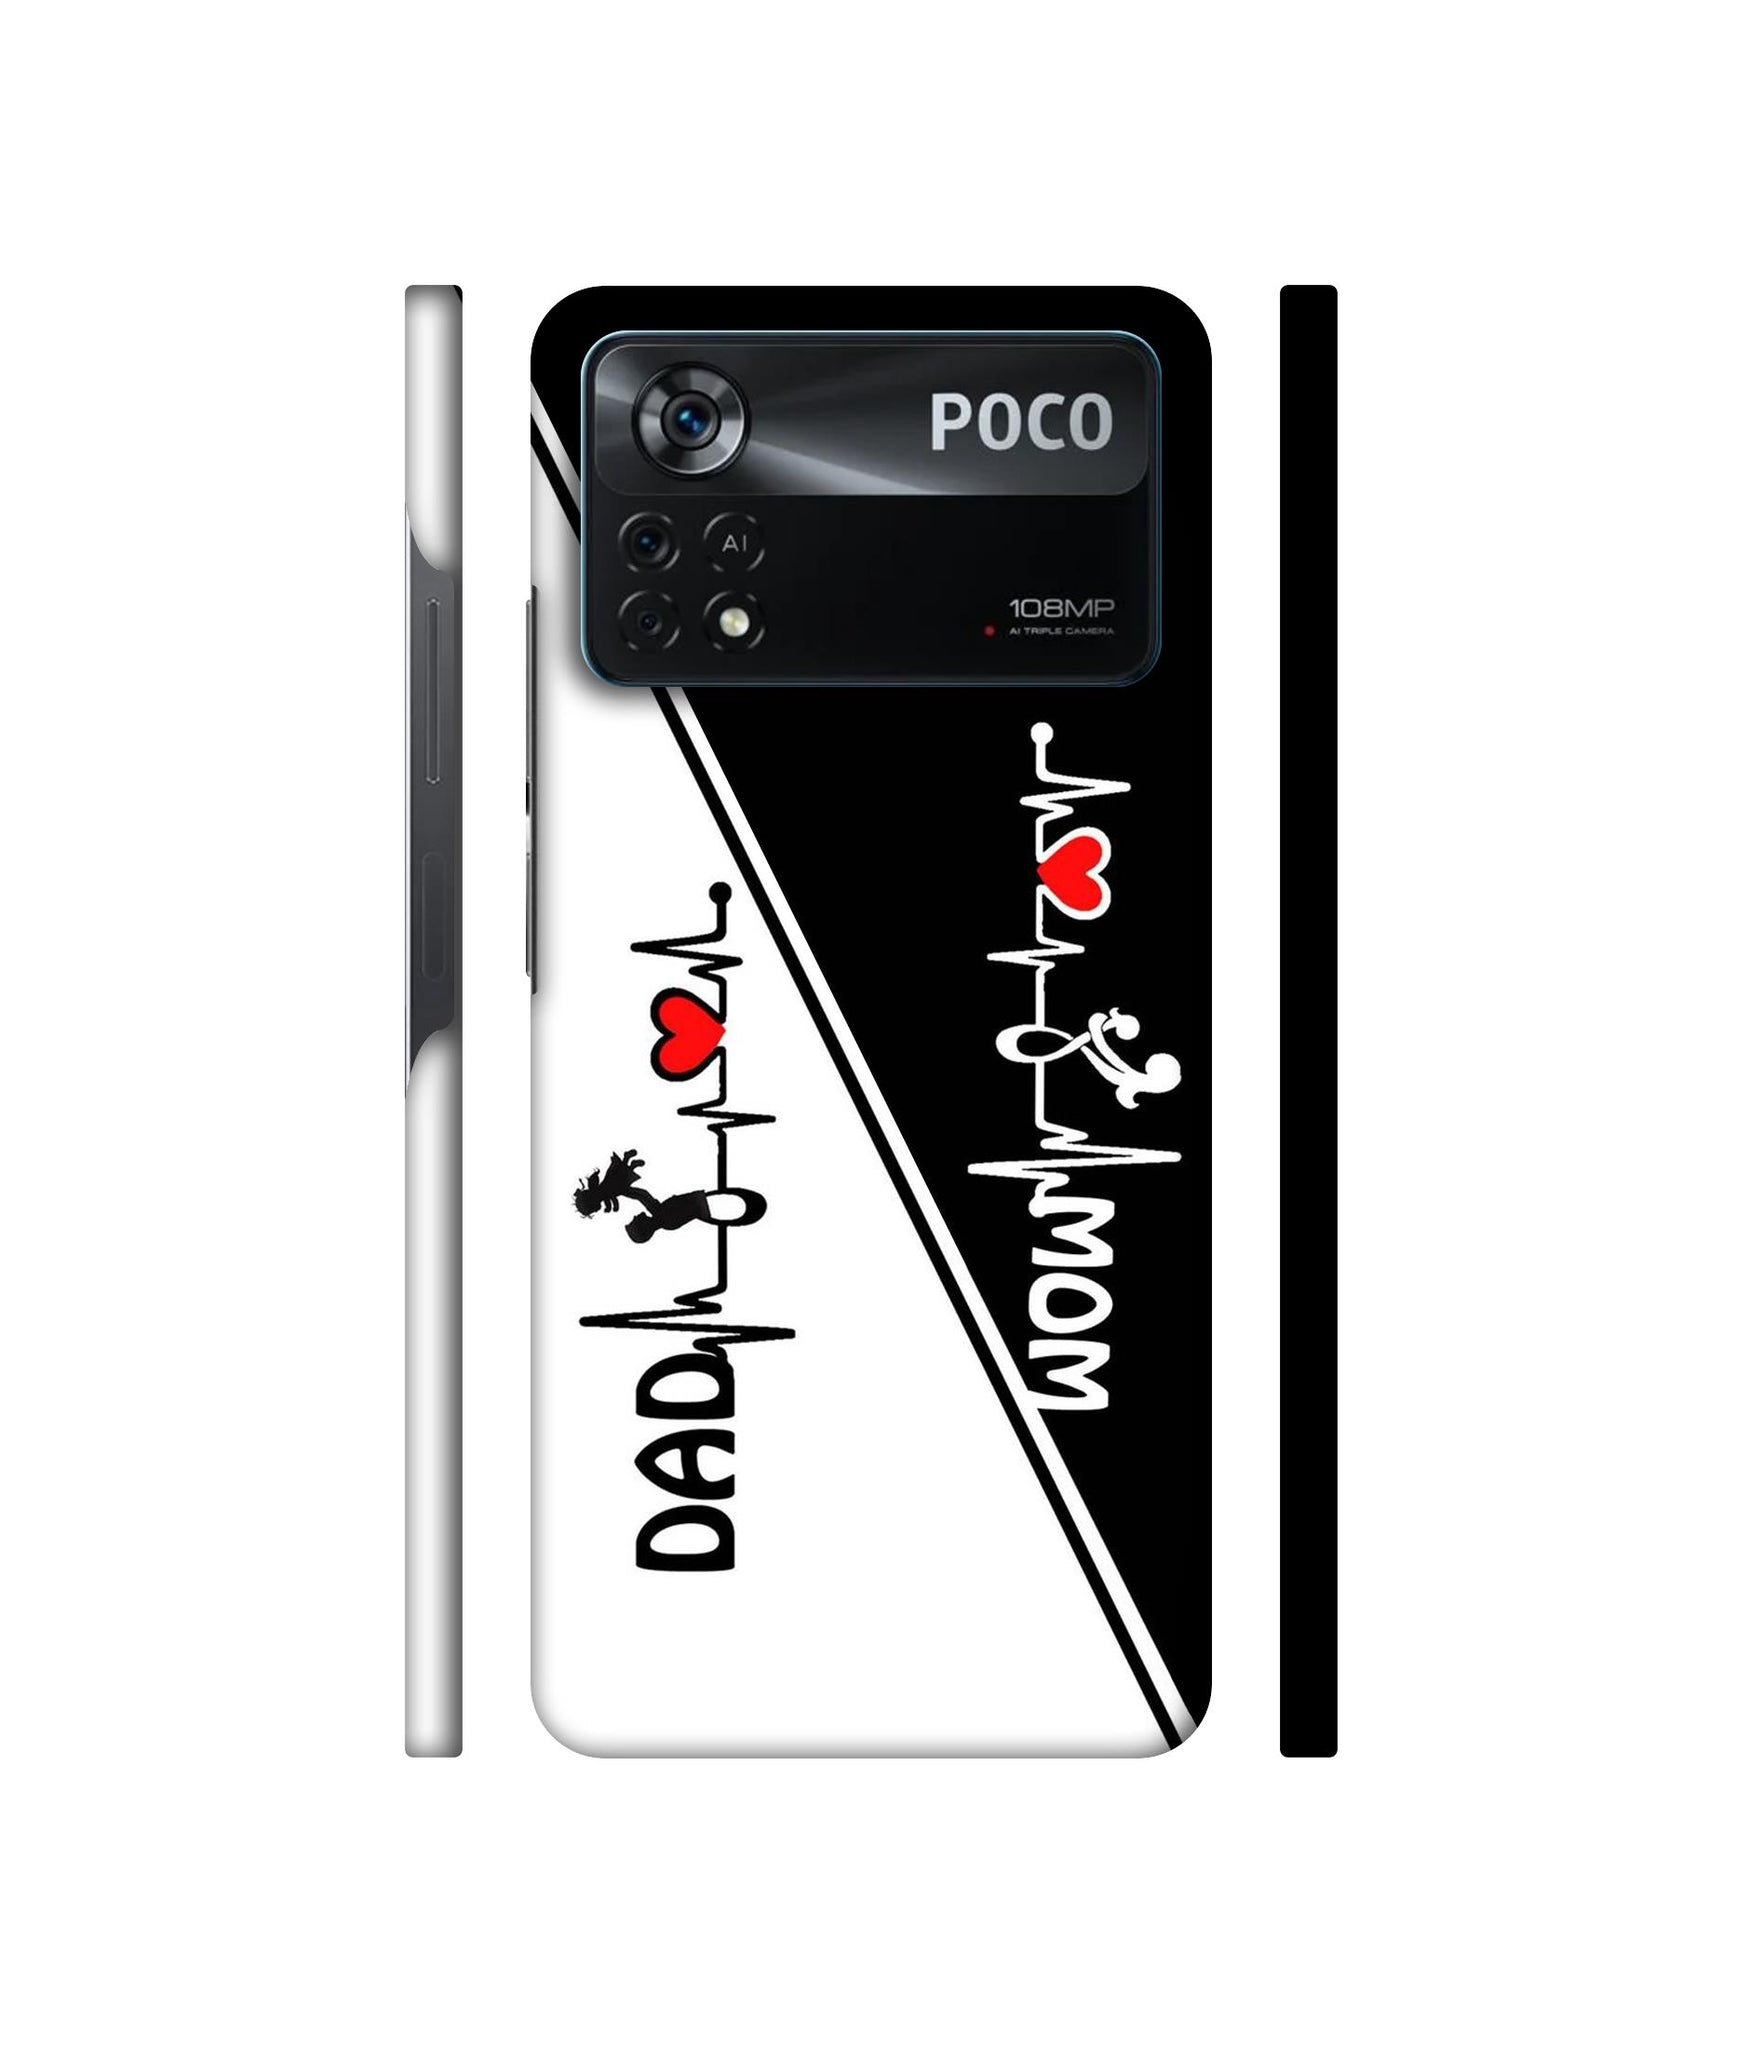 Mi Poco X4 Pro 5G